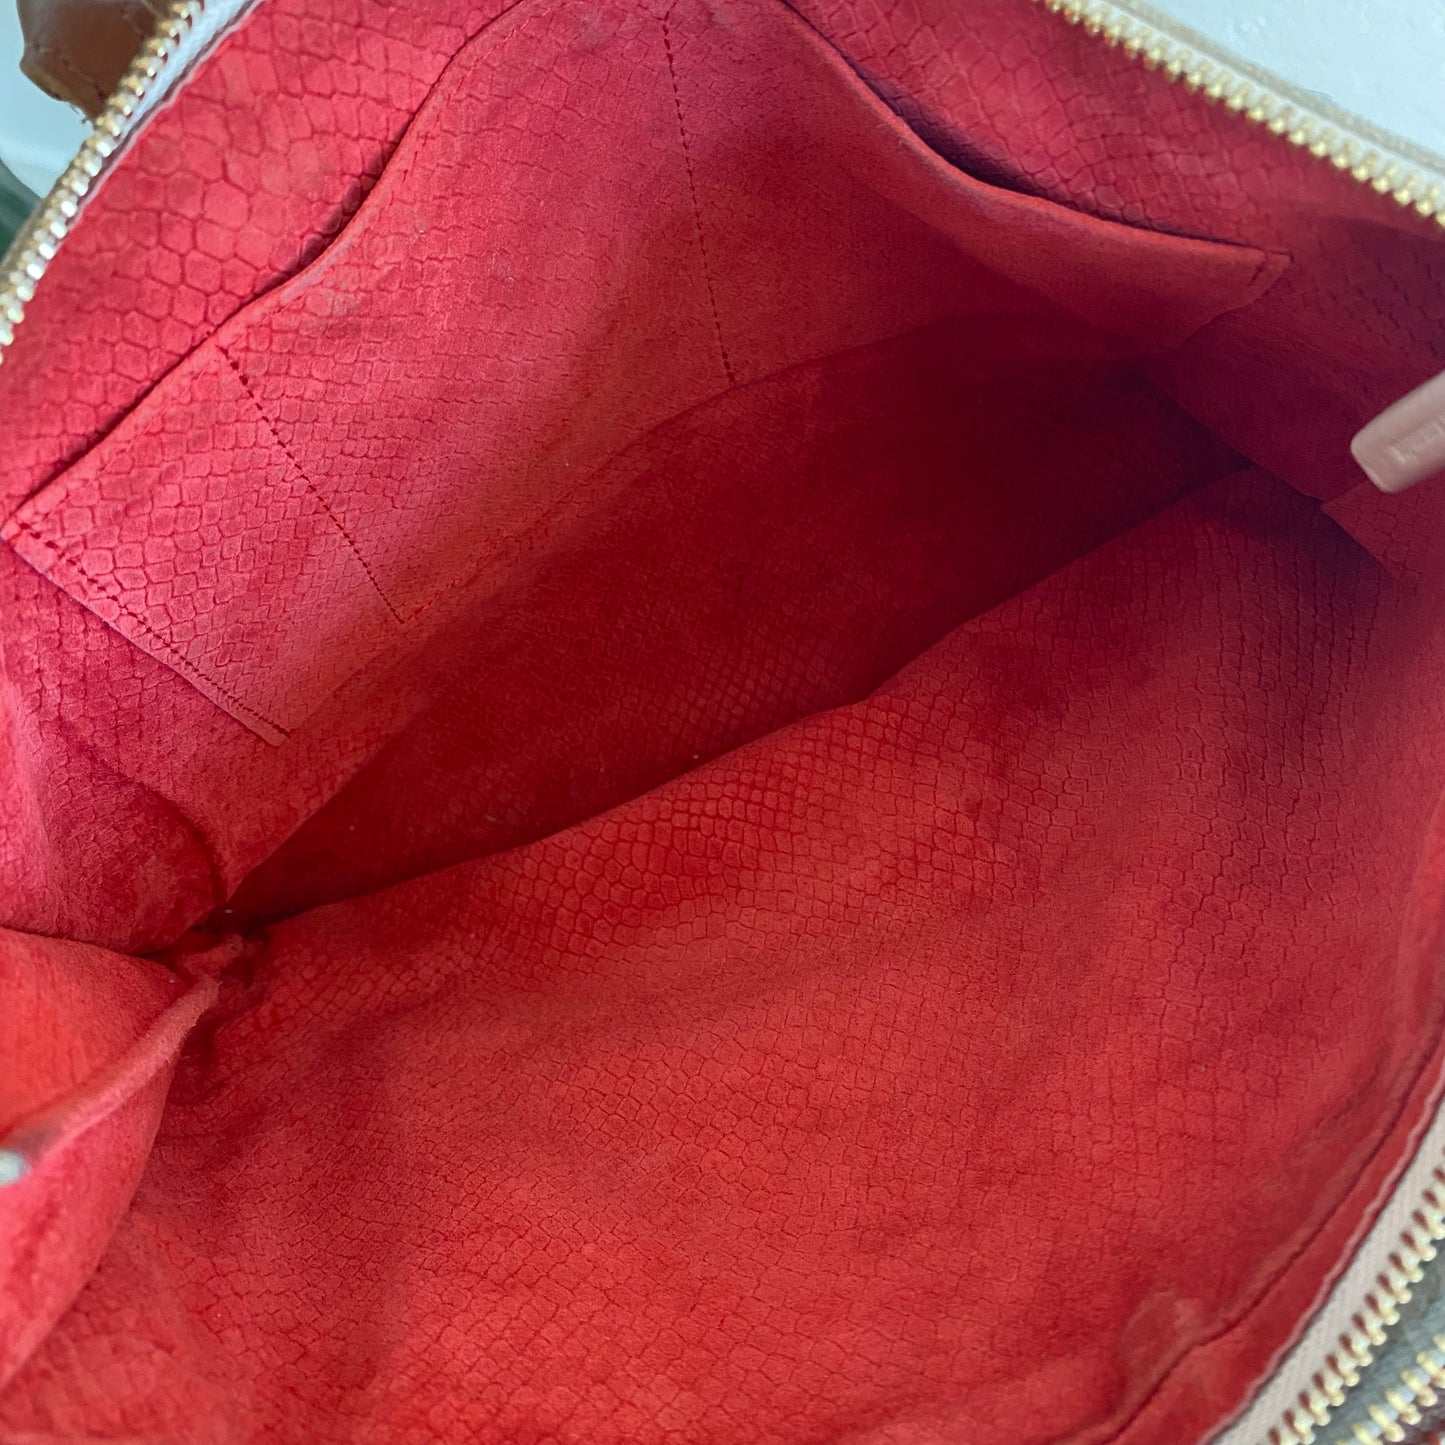 Hammitt Craig Sandstone Leather Backpack